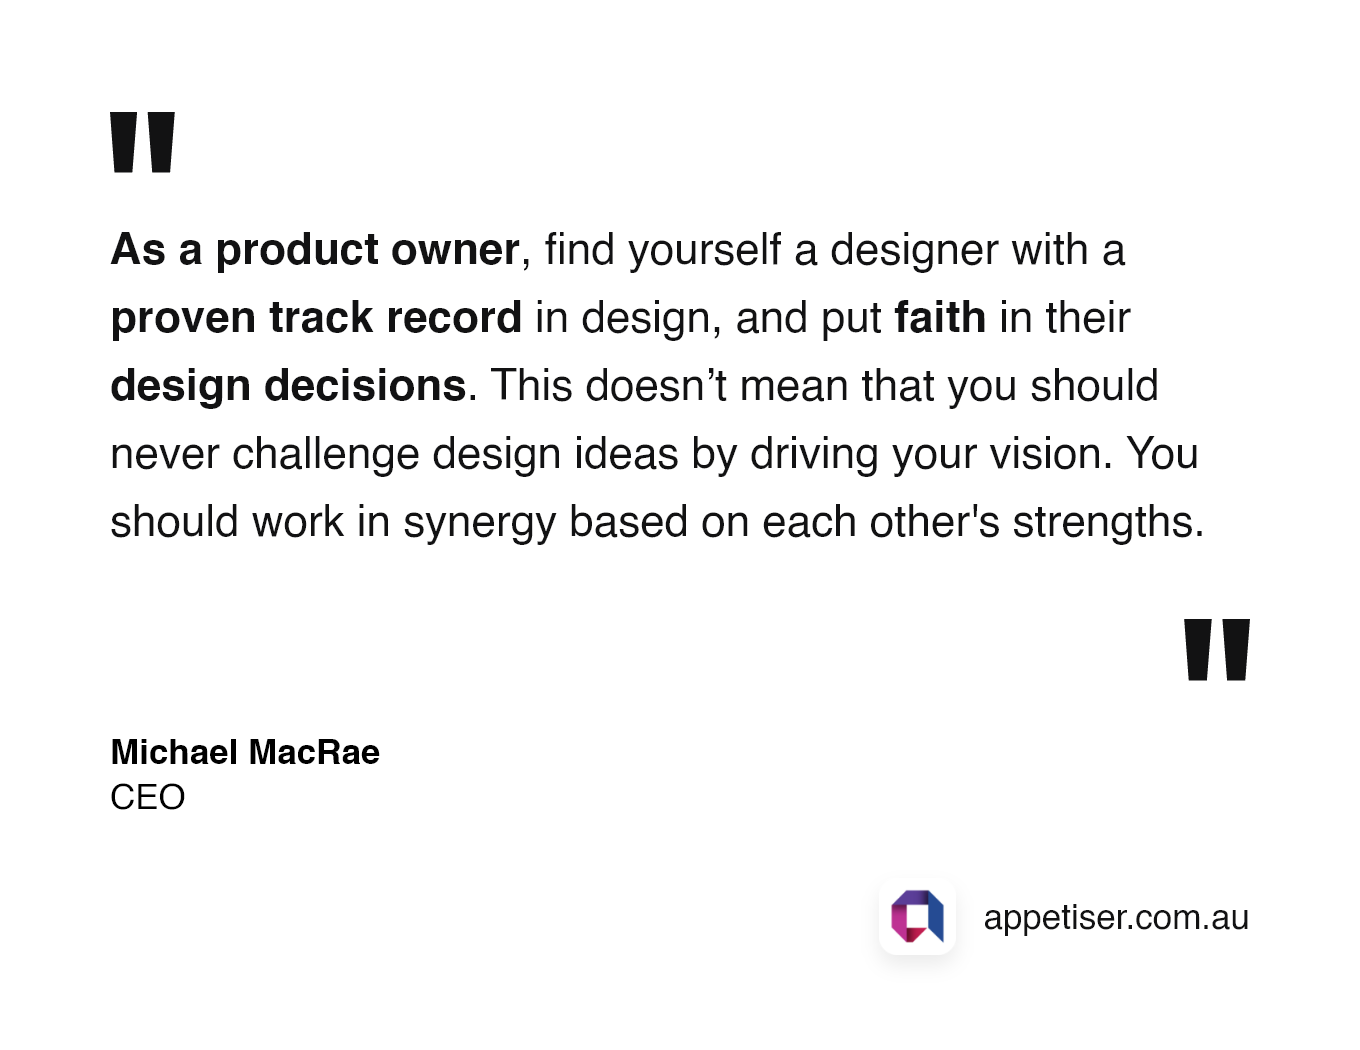 HAMAD: Michael MacRae quote about product designer